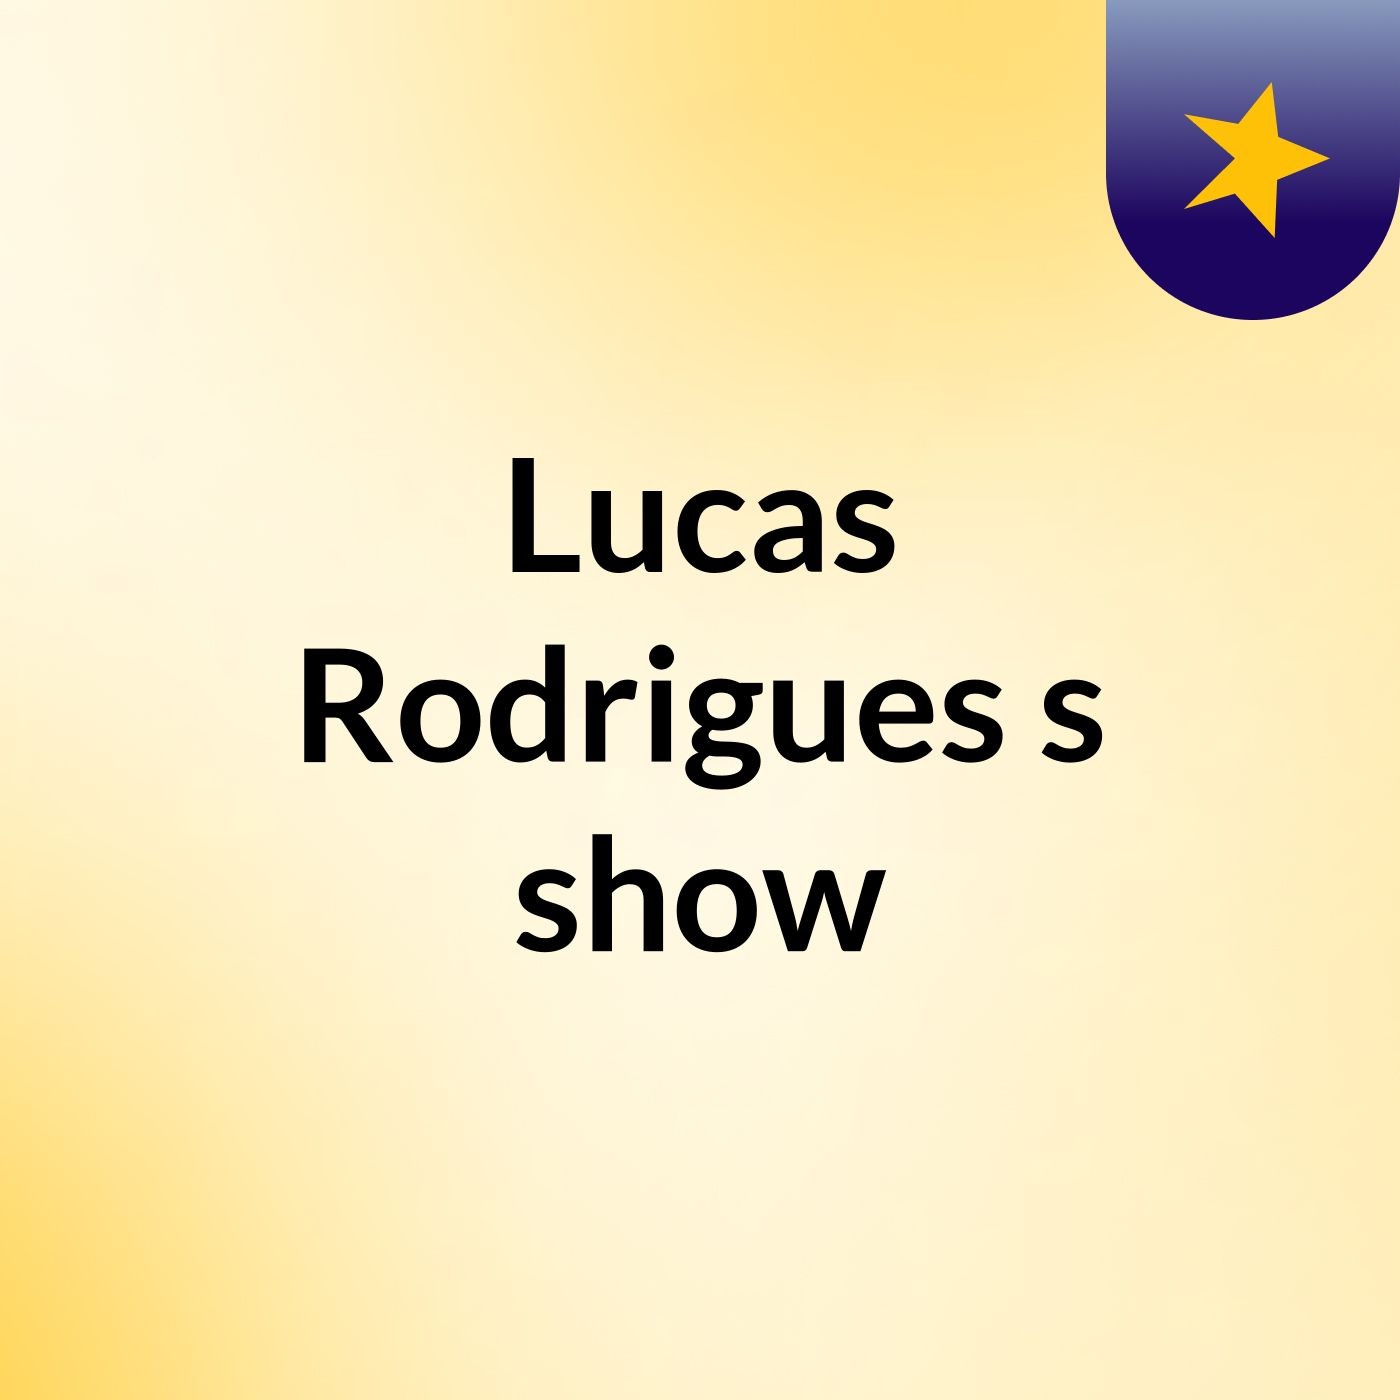 Lucas Rodrigues's show